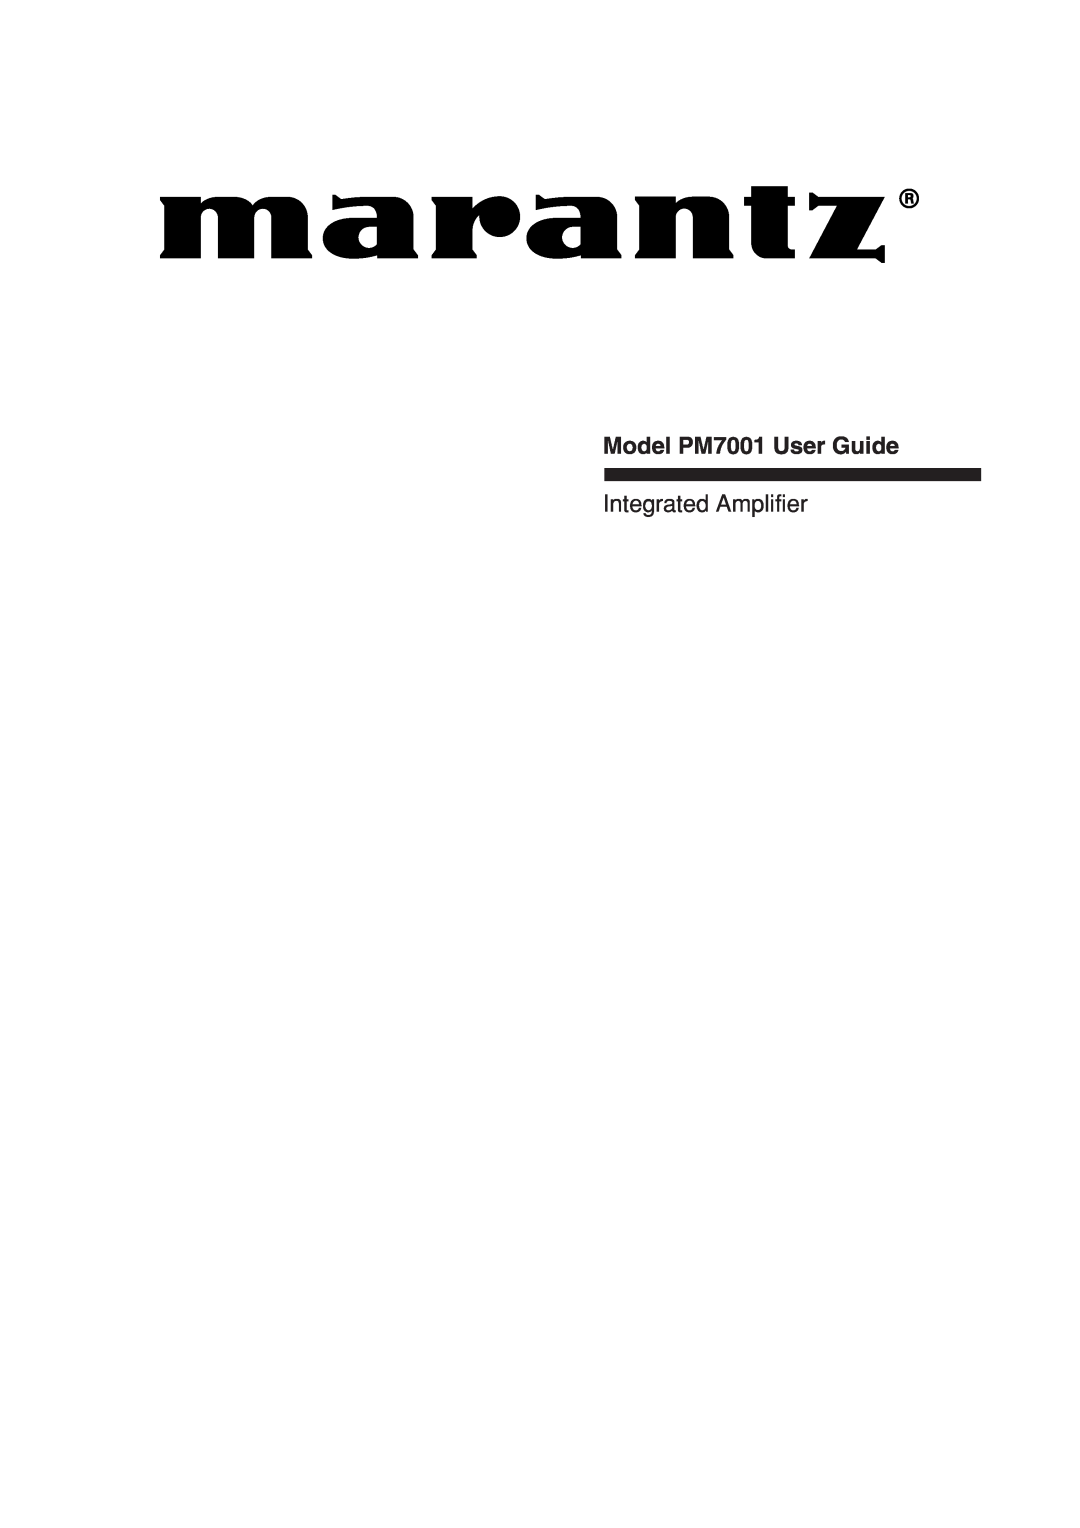 Marantz manual Model PM7001 User Guide, Integrated Amplifier 